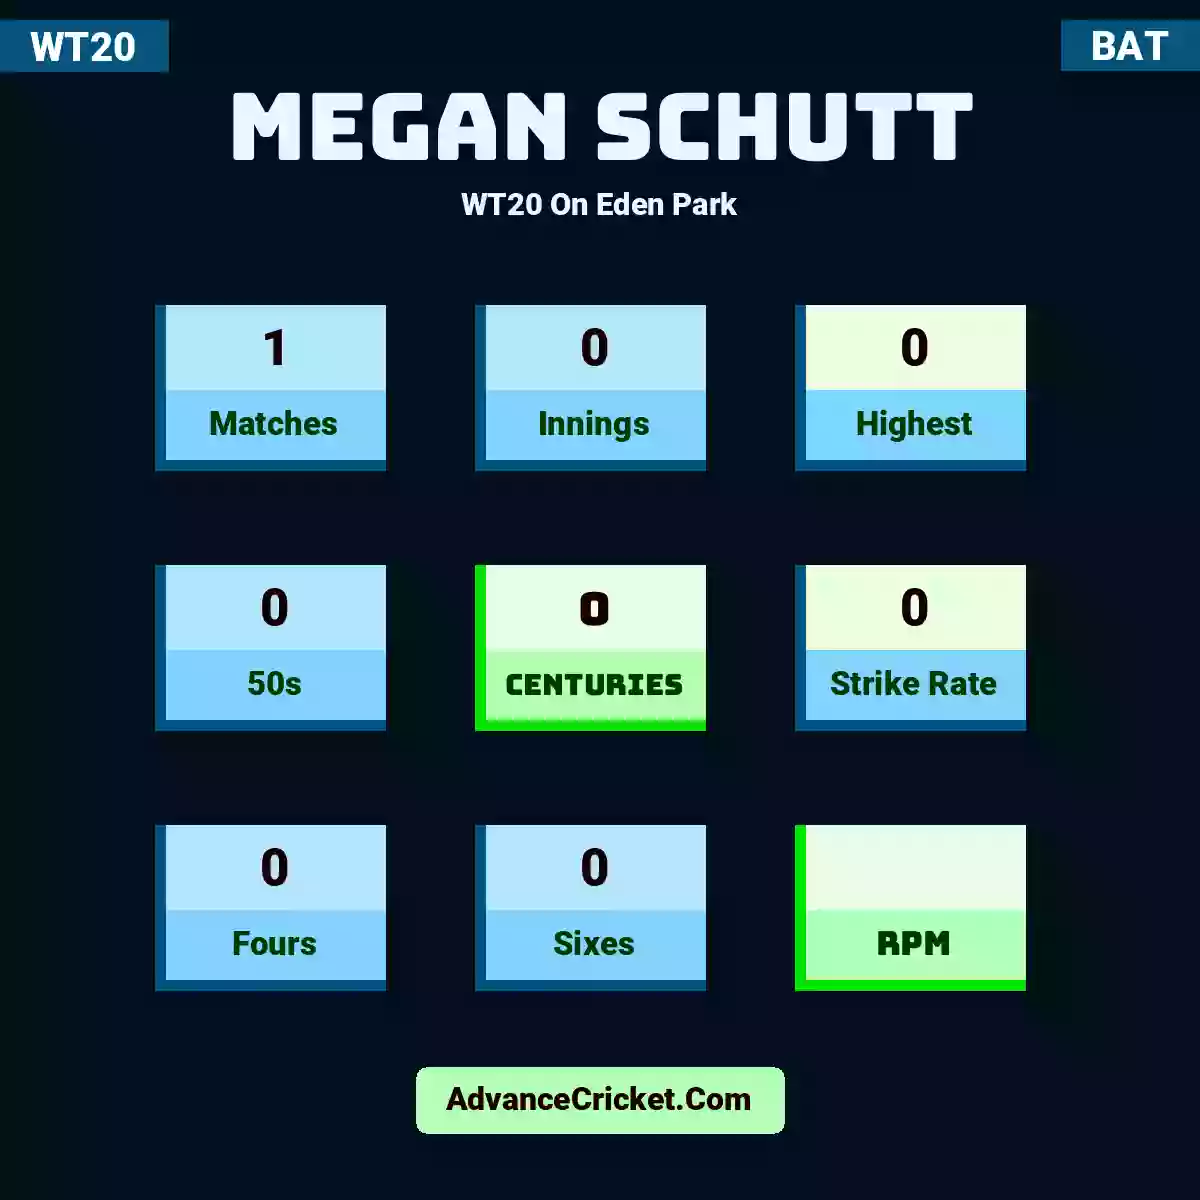 Megan Schutt WT20  On Eden Park, Megan Schutt played 1 matches, scored 0 runs as highest, 0 half-centuries, and 0 centuries, with a strike rate of 0. M.Schutt hit 0 fours and 0 sixes.